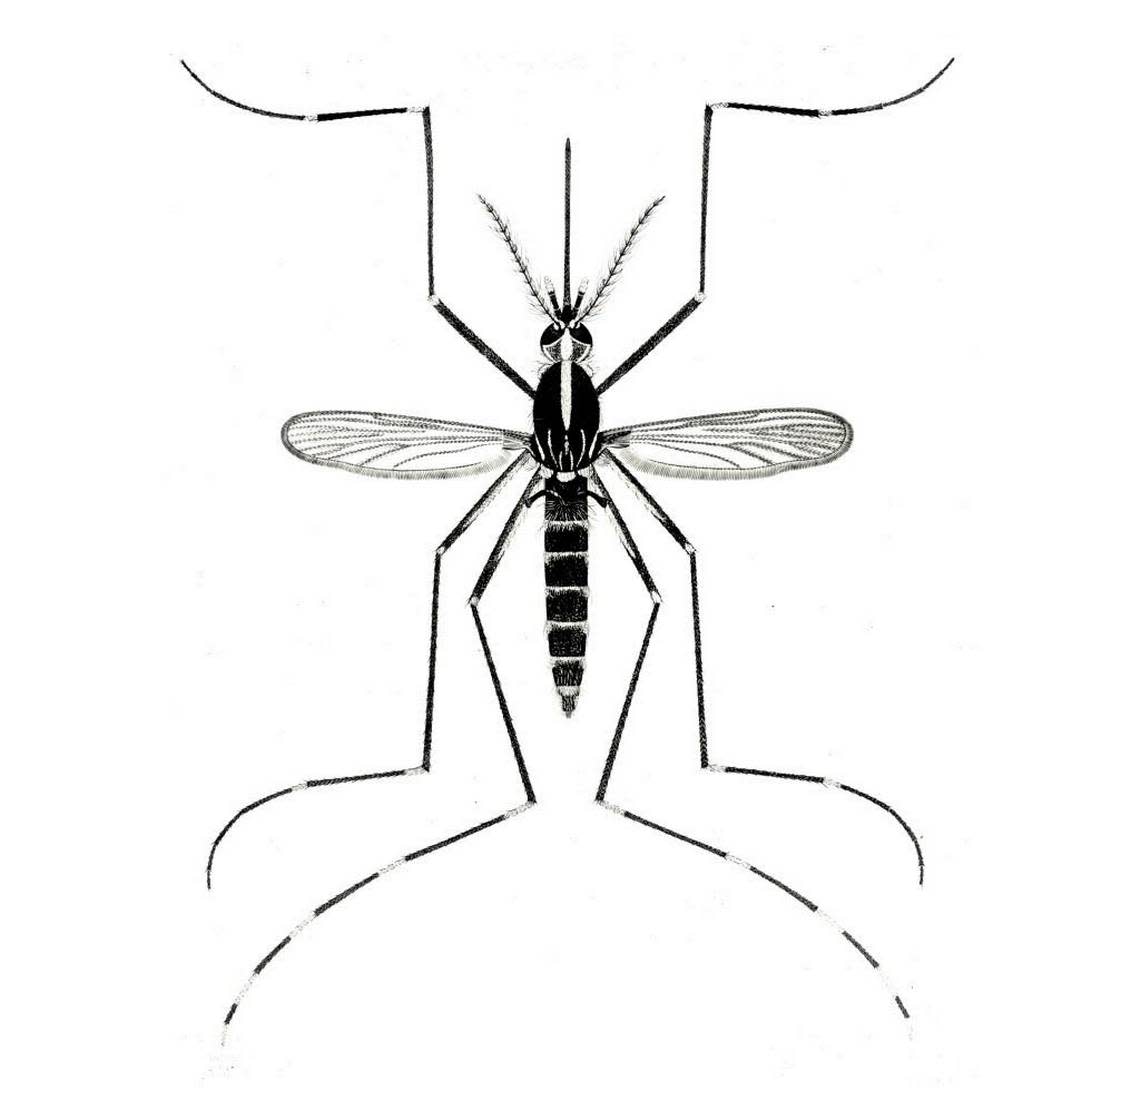 Aedes albopictus: The Asian tiger mosquito. VICHAI MALIKUL/Department of Entomology/Smithsonian Institution via The New York Times